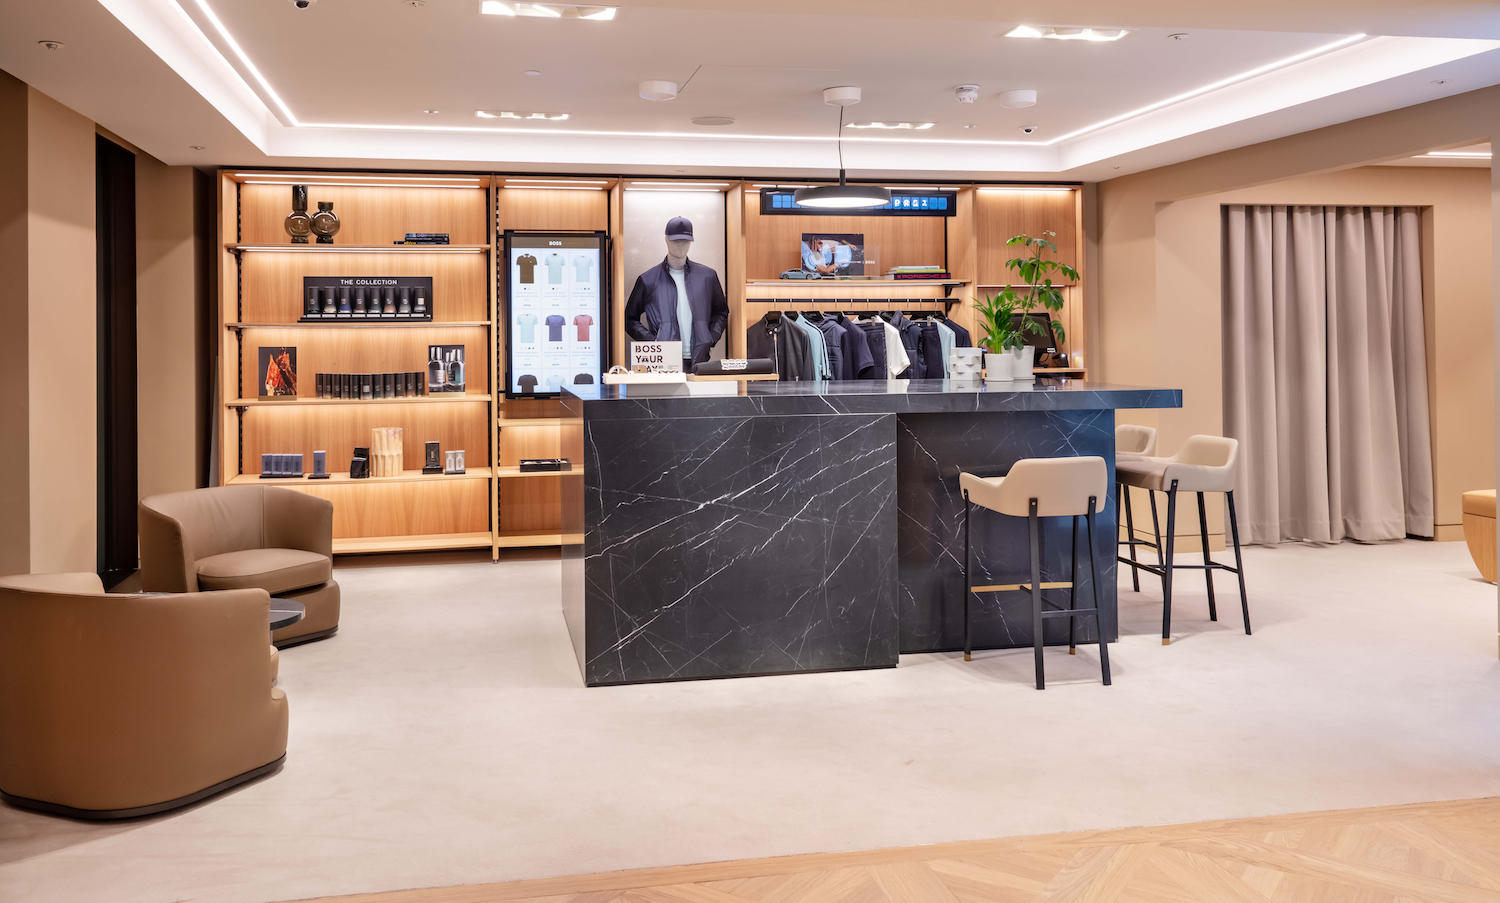 kalorie T Følelse BOSS launch new Oxford Street store concept and experience - Retail Focus -  Retail Design